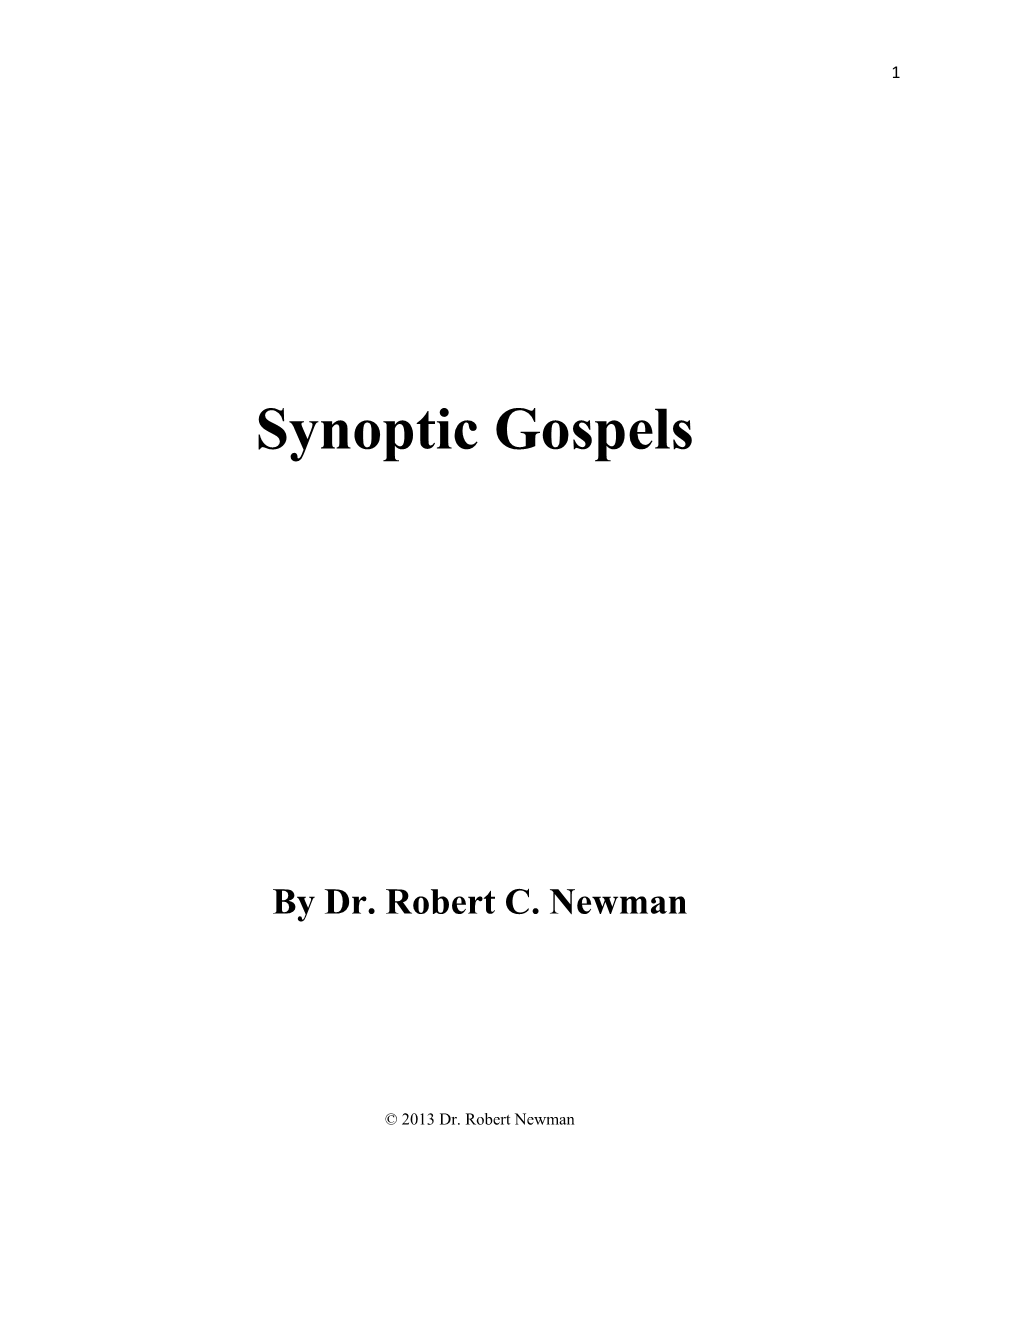 Synoptic Gospels, by Dr. Robert C. Newman